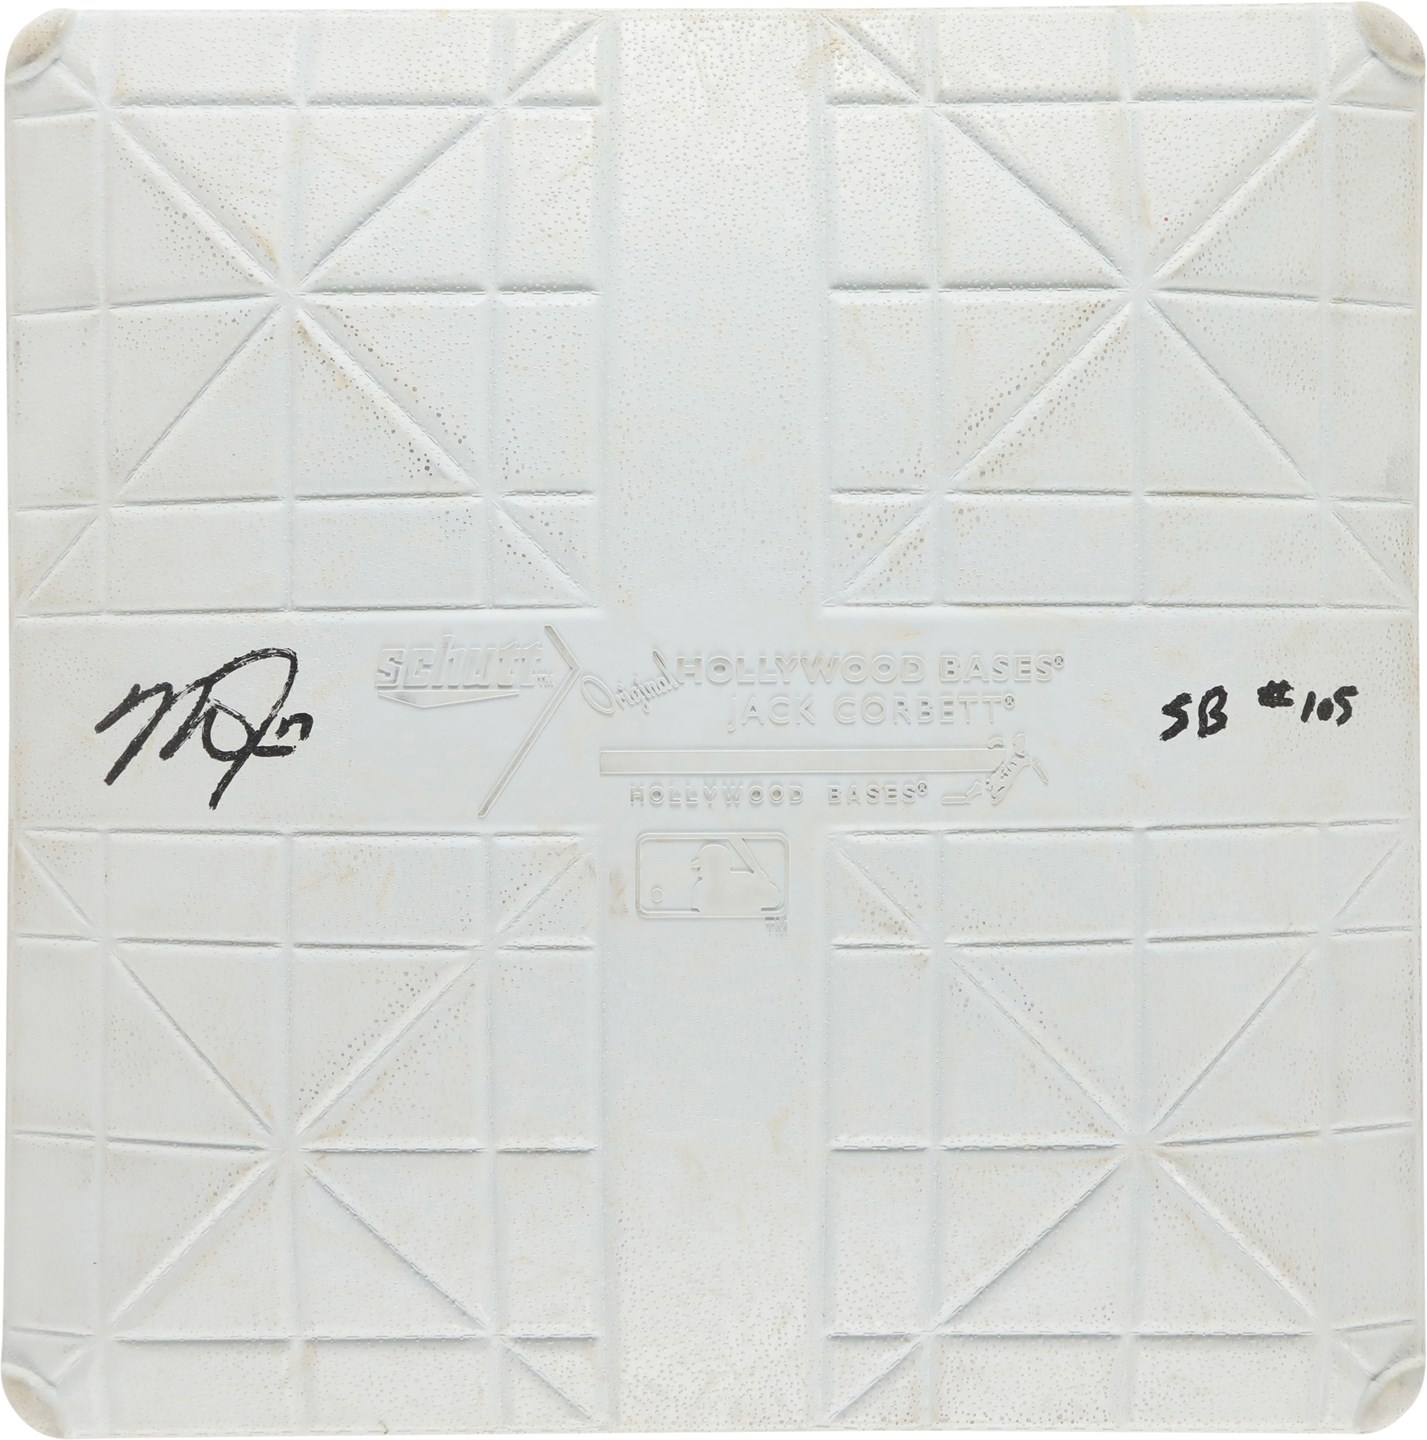 Baseball Equipment - 4/20/15 Mike Trout Career Stolen Base #105 Signed Game Used Base (MLB & JSA)